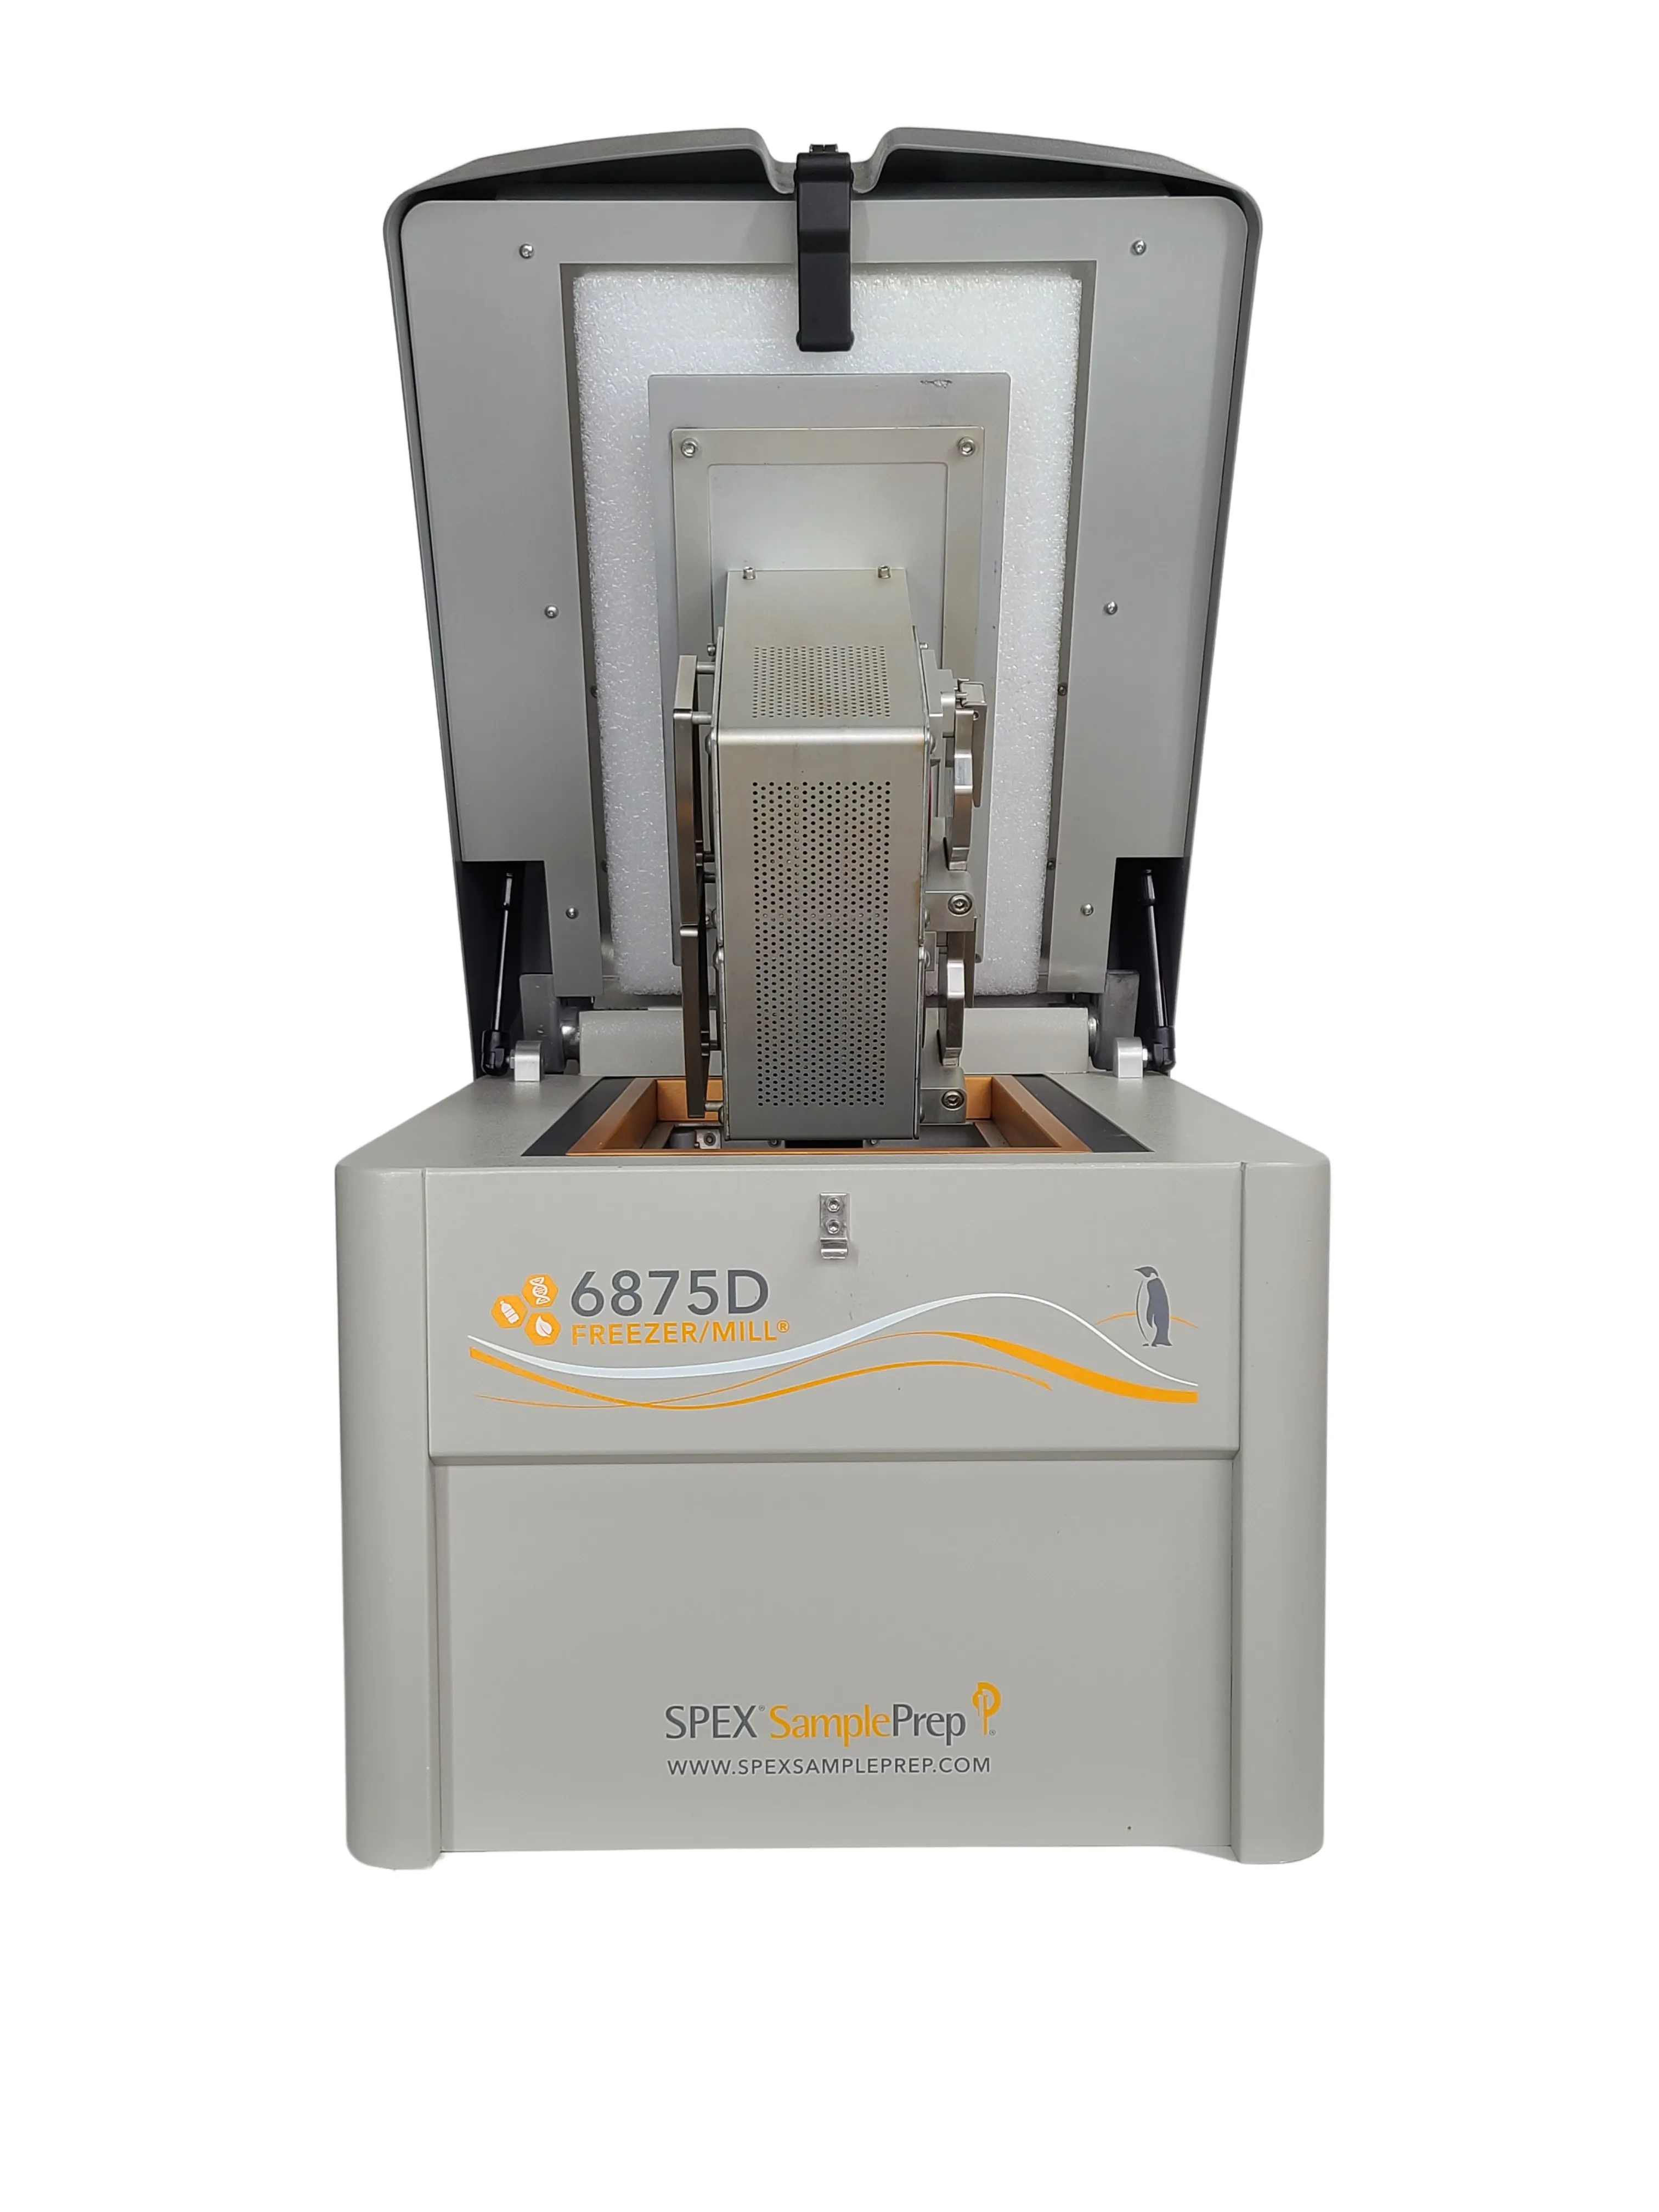 SPEX Sample Prep 6875D Large Freezer/Mill Cryogenic grinder